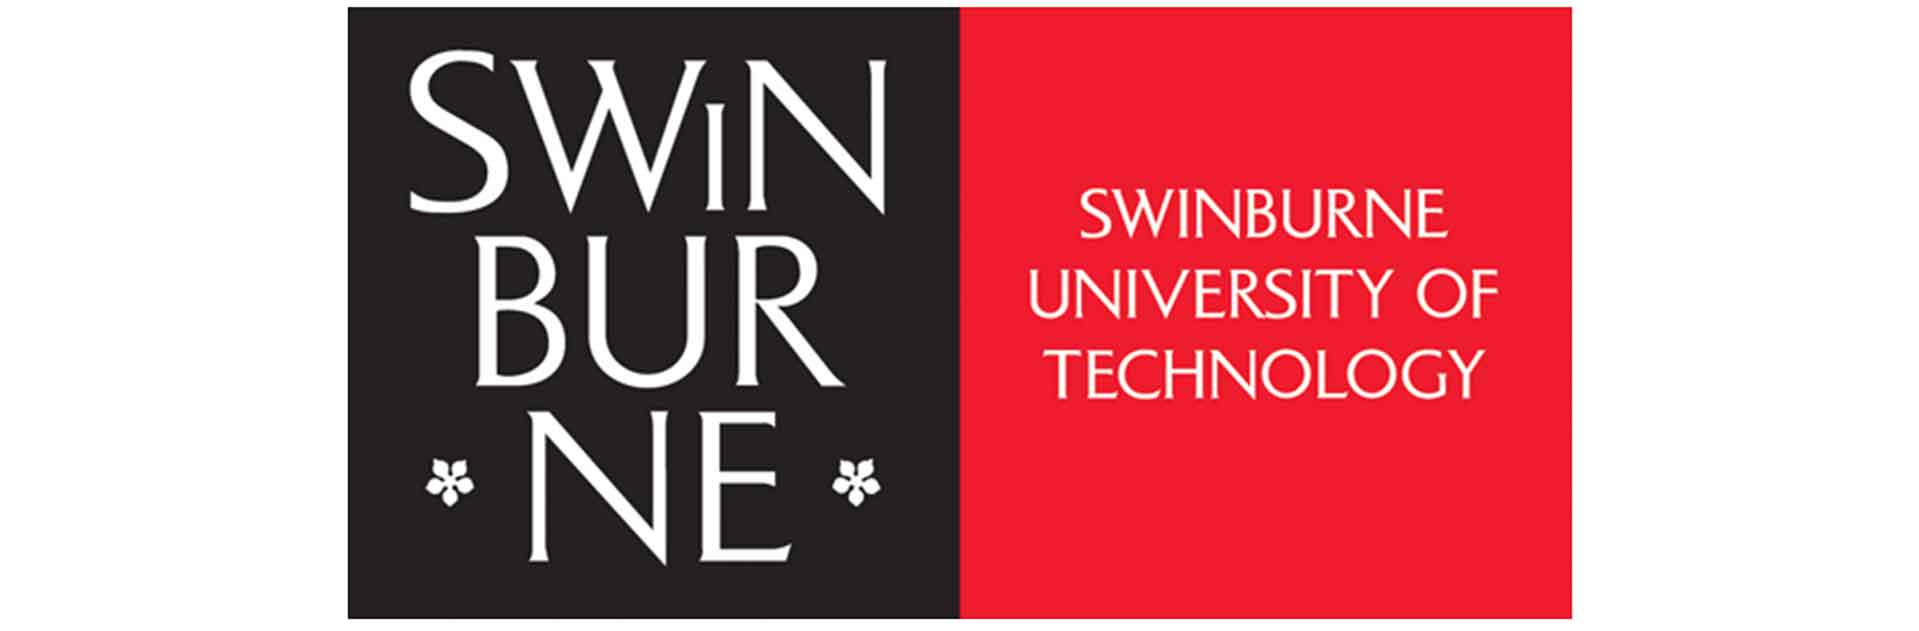 Swinburne-University